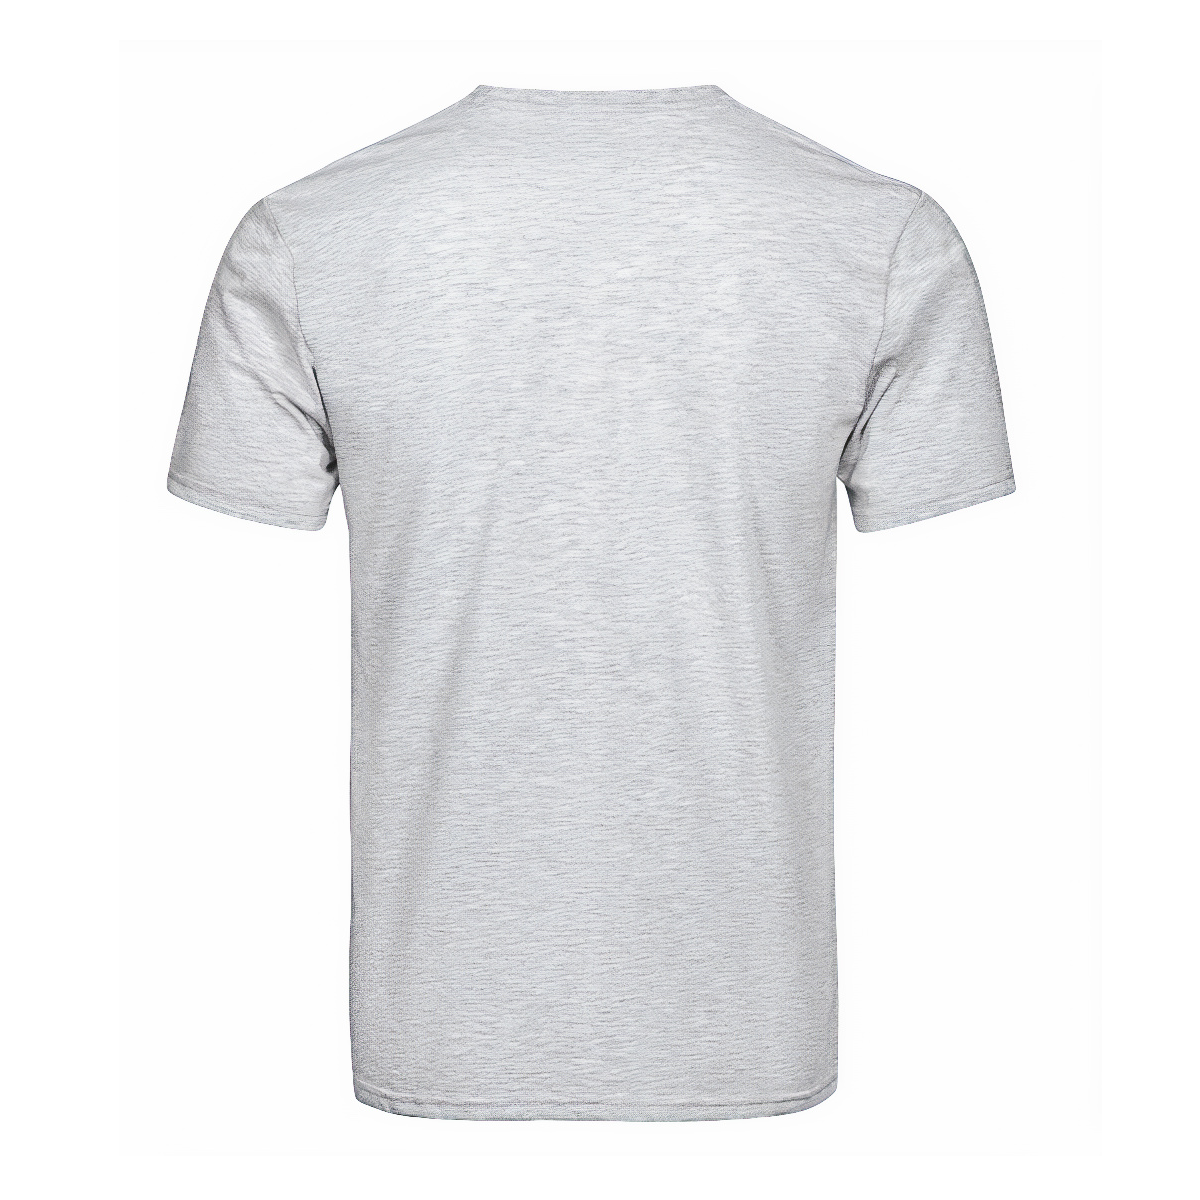 Kinninmont Tartan Crest T-shirt - I'm not yelling style